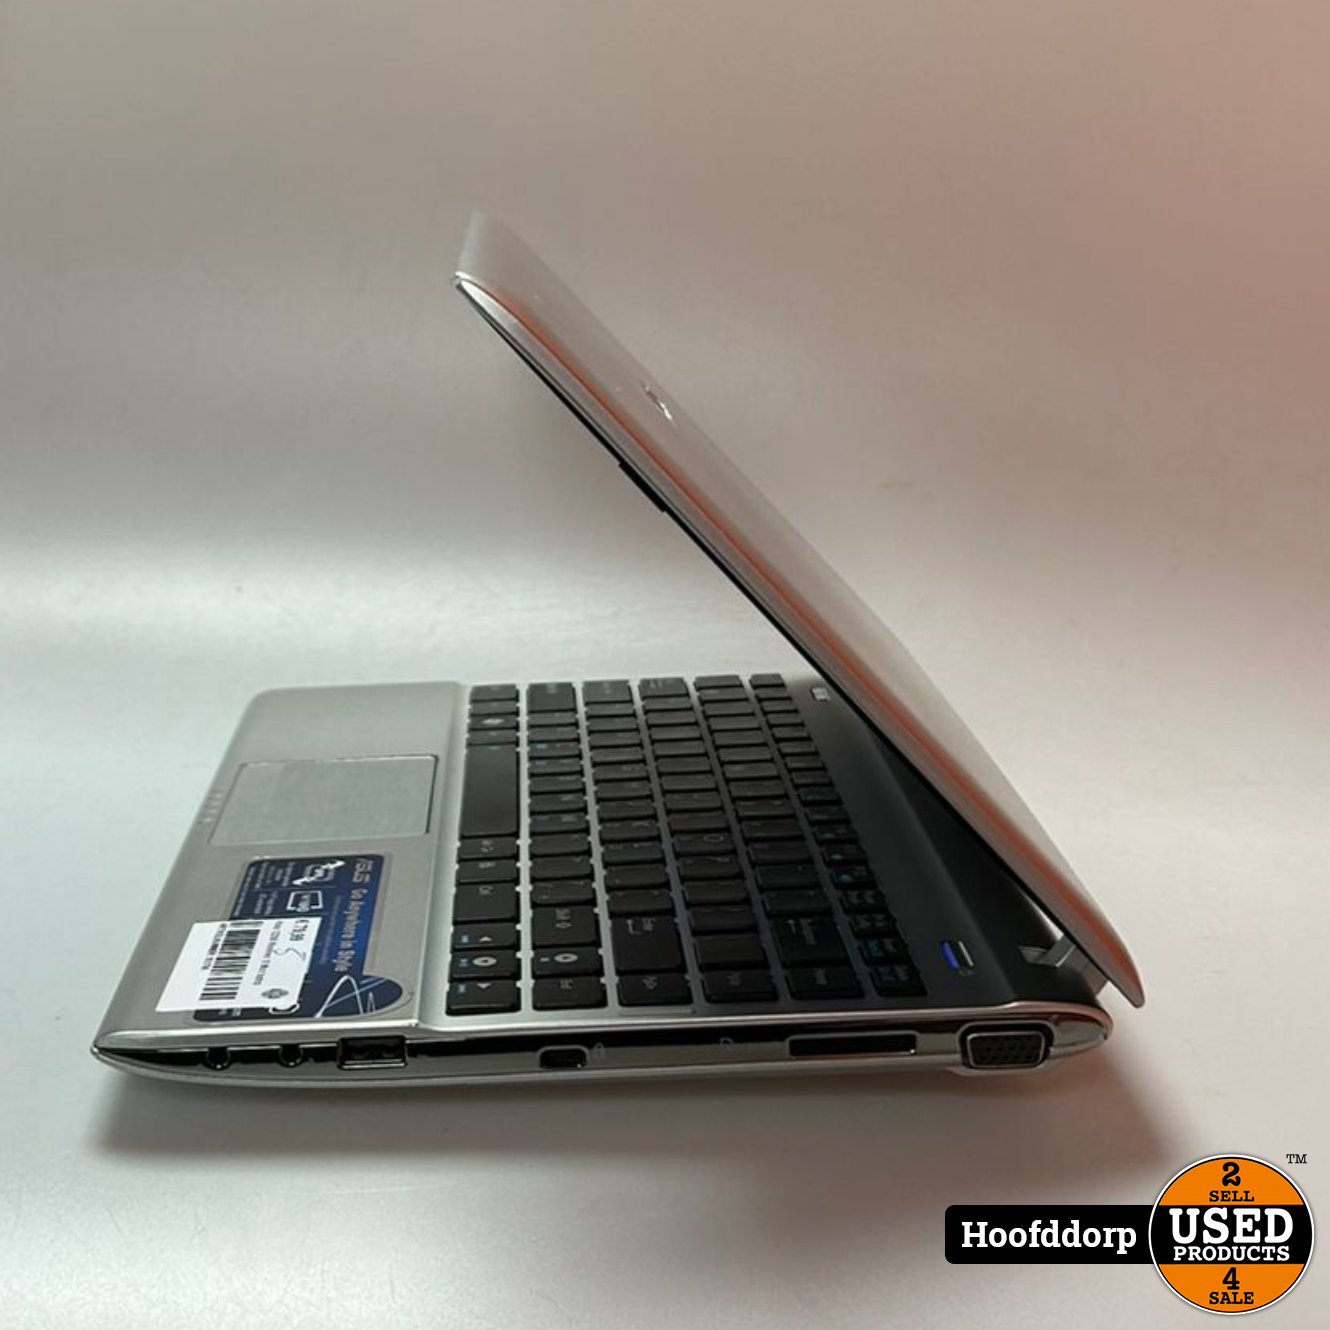 appel materiaal Uitrusting Asus 1225B Windows 10 Mini laptop - Used Products Hoofddorp